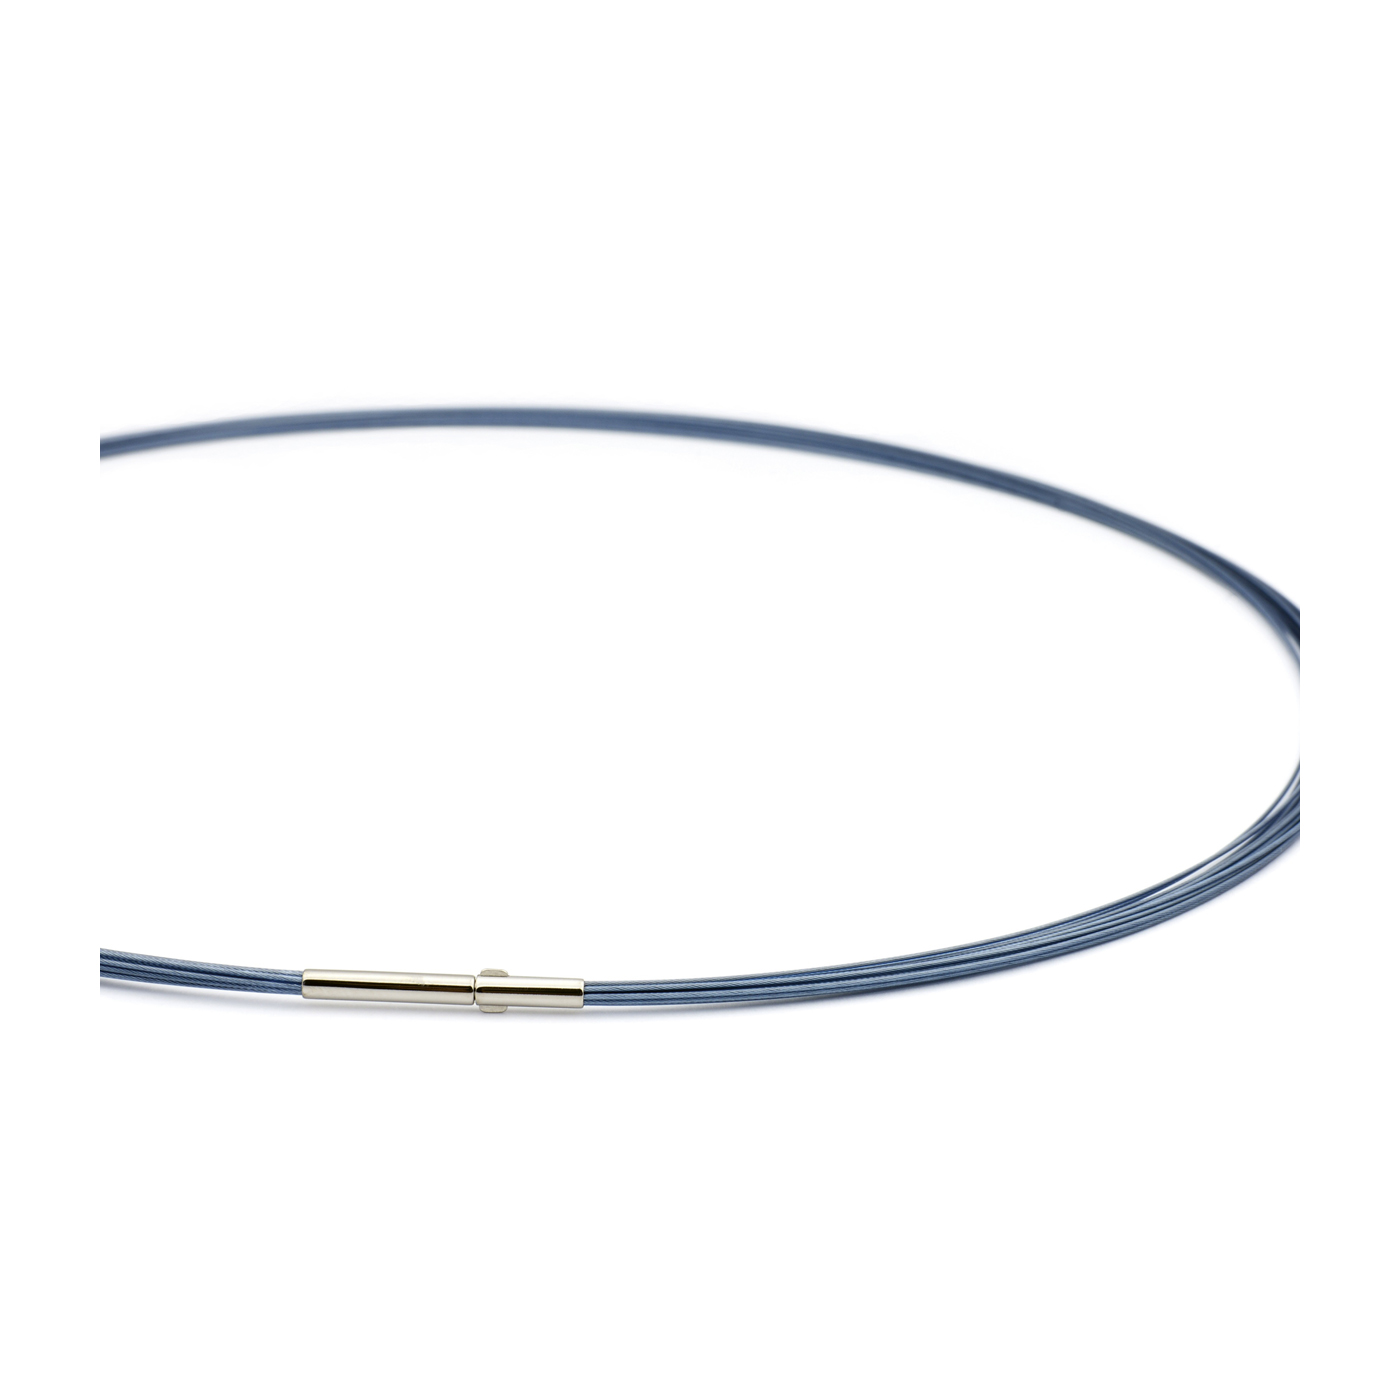 Rope Necklace, Montana Blue, 12 Rows, 45 cm - 1 piece